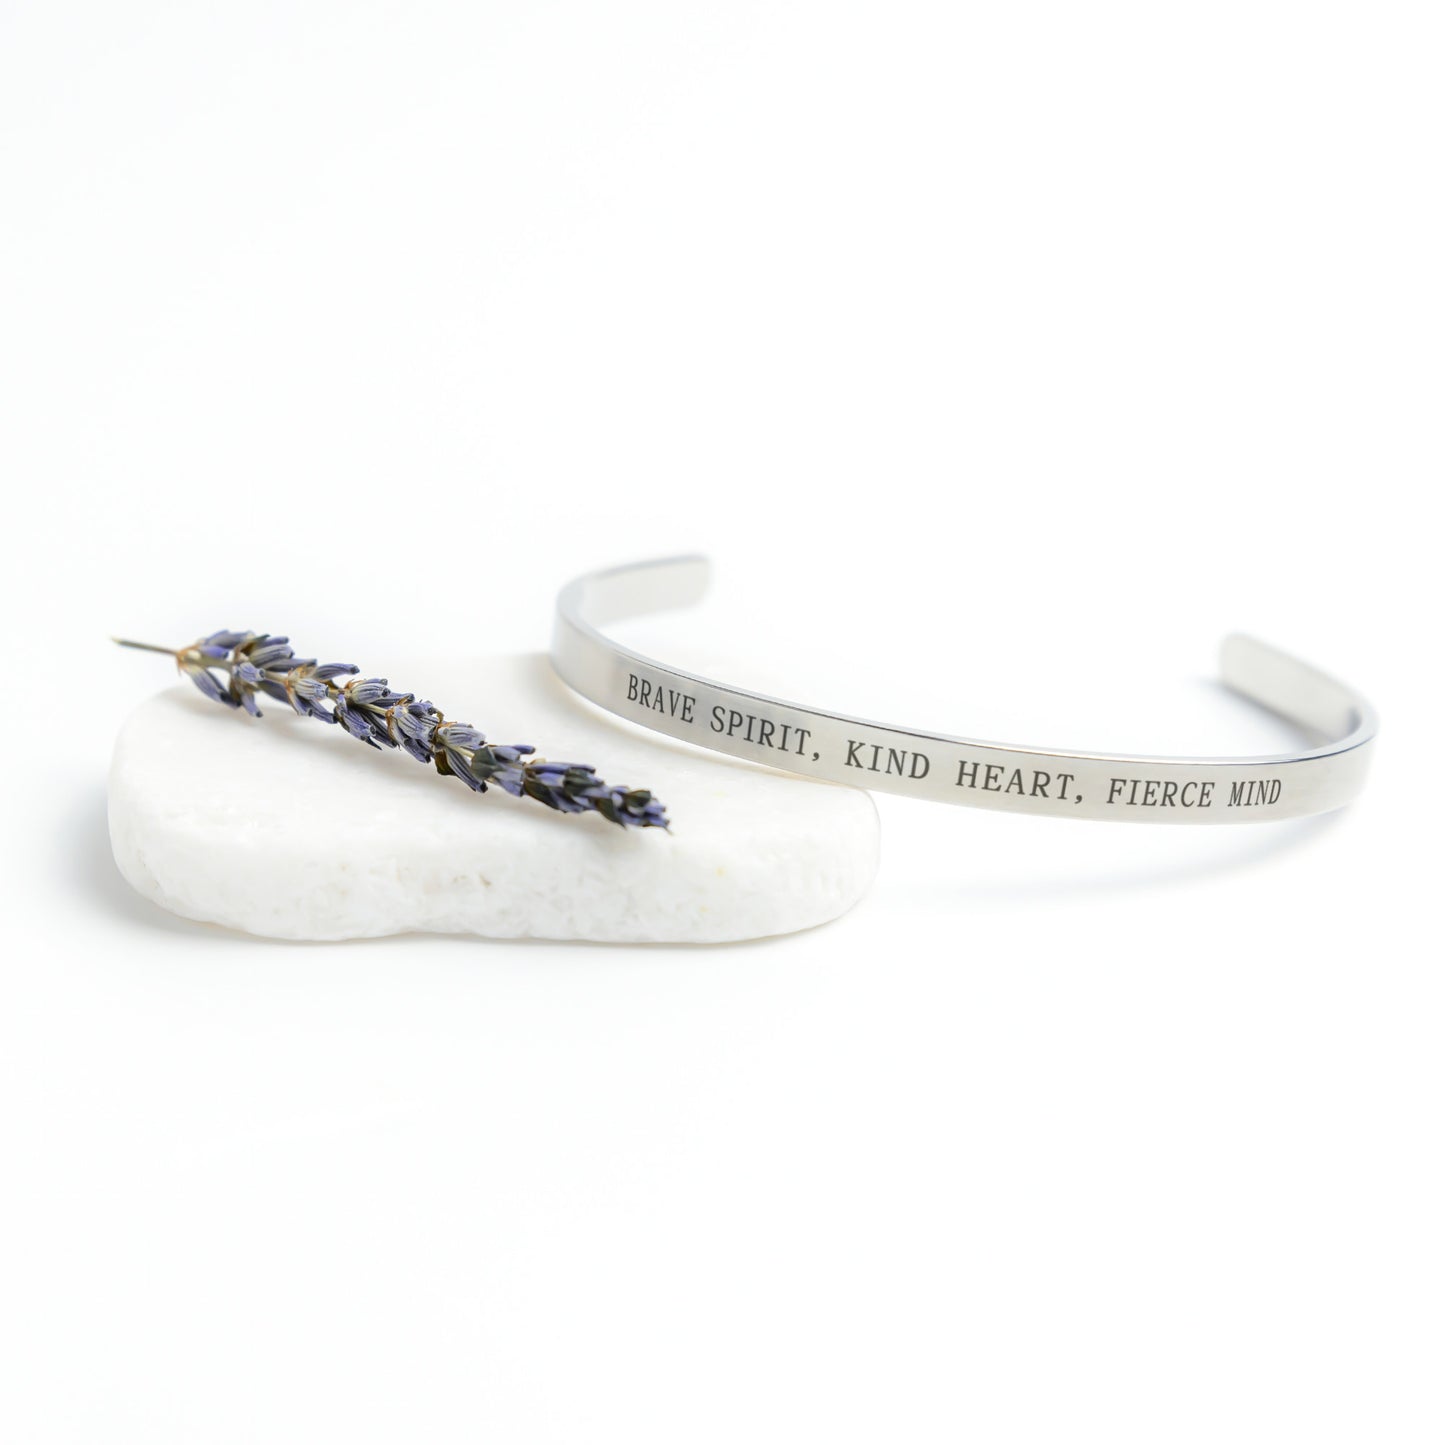 Brave spirit - cuff bracelet